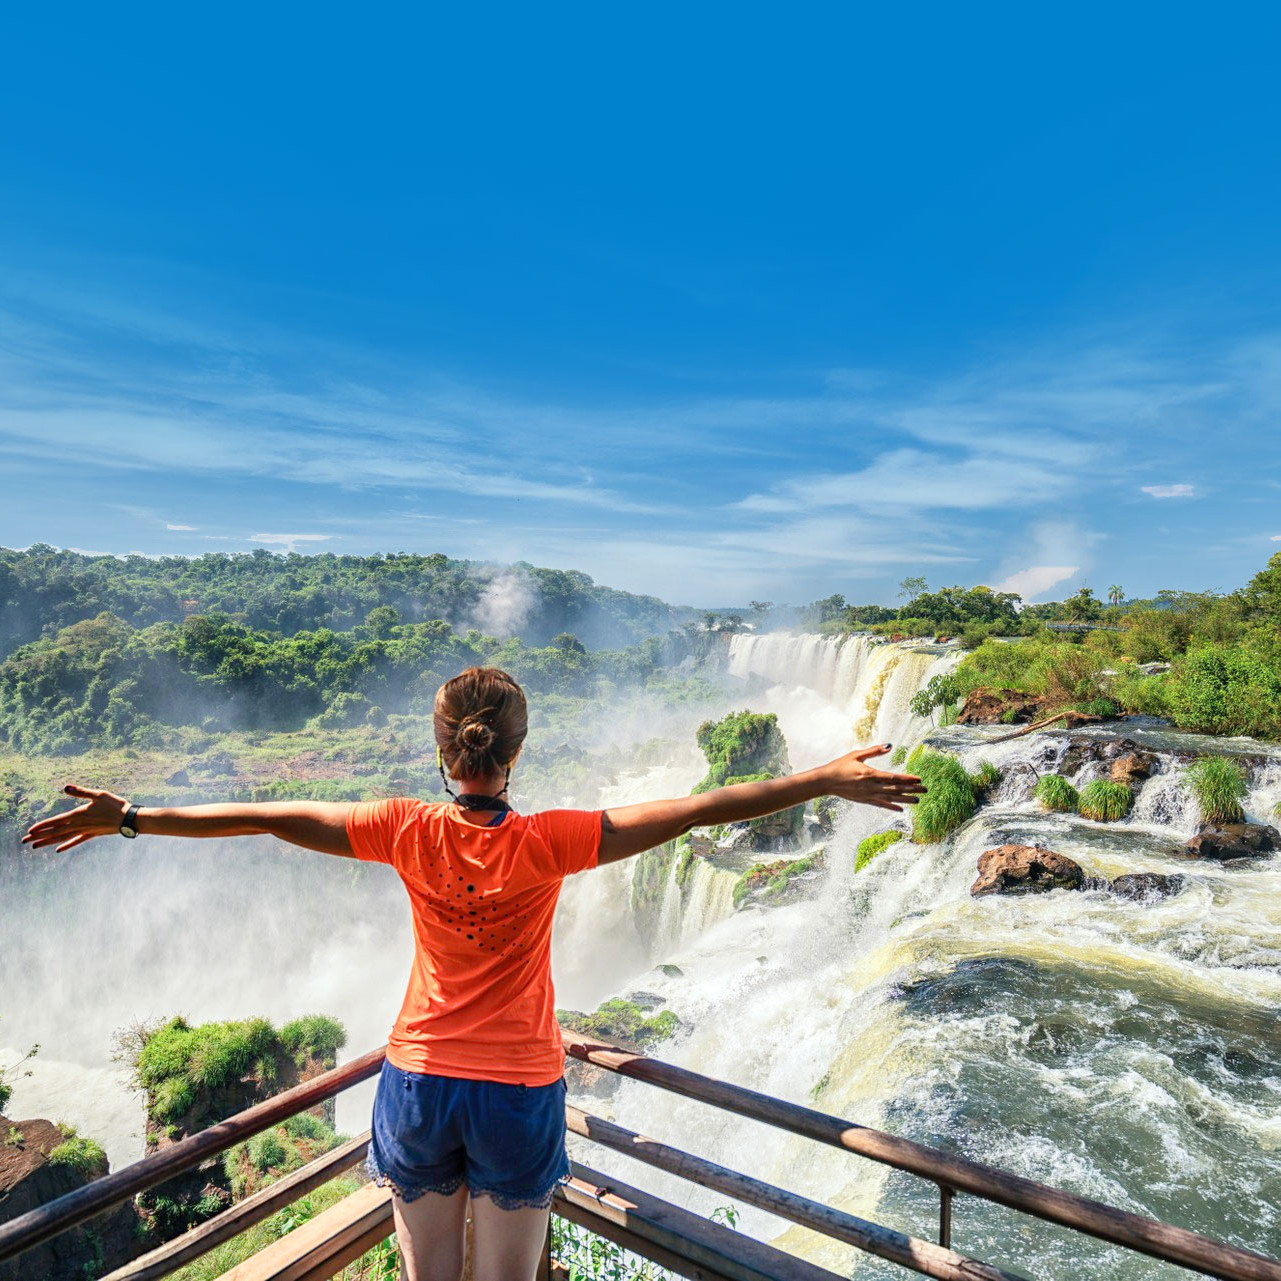 Iguazu Falls South America Travel guide